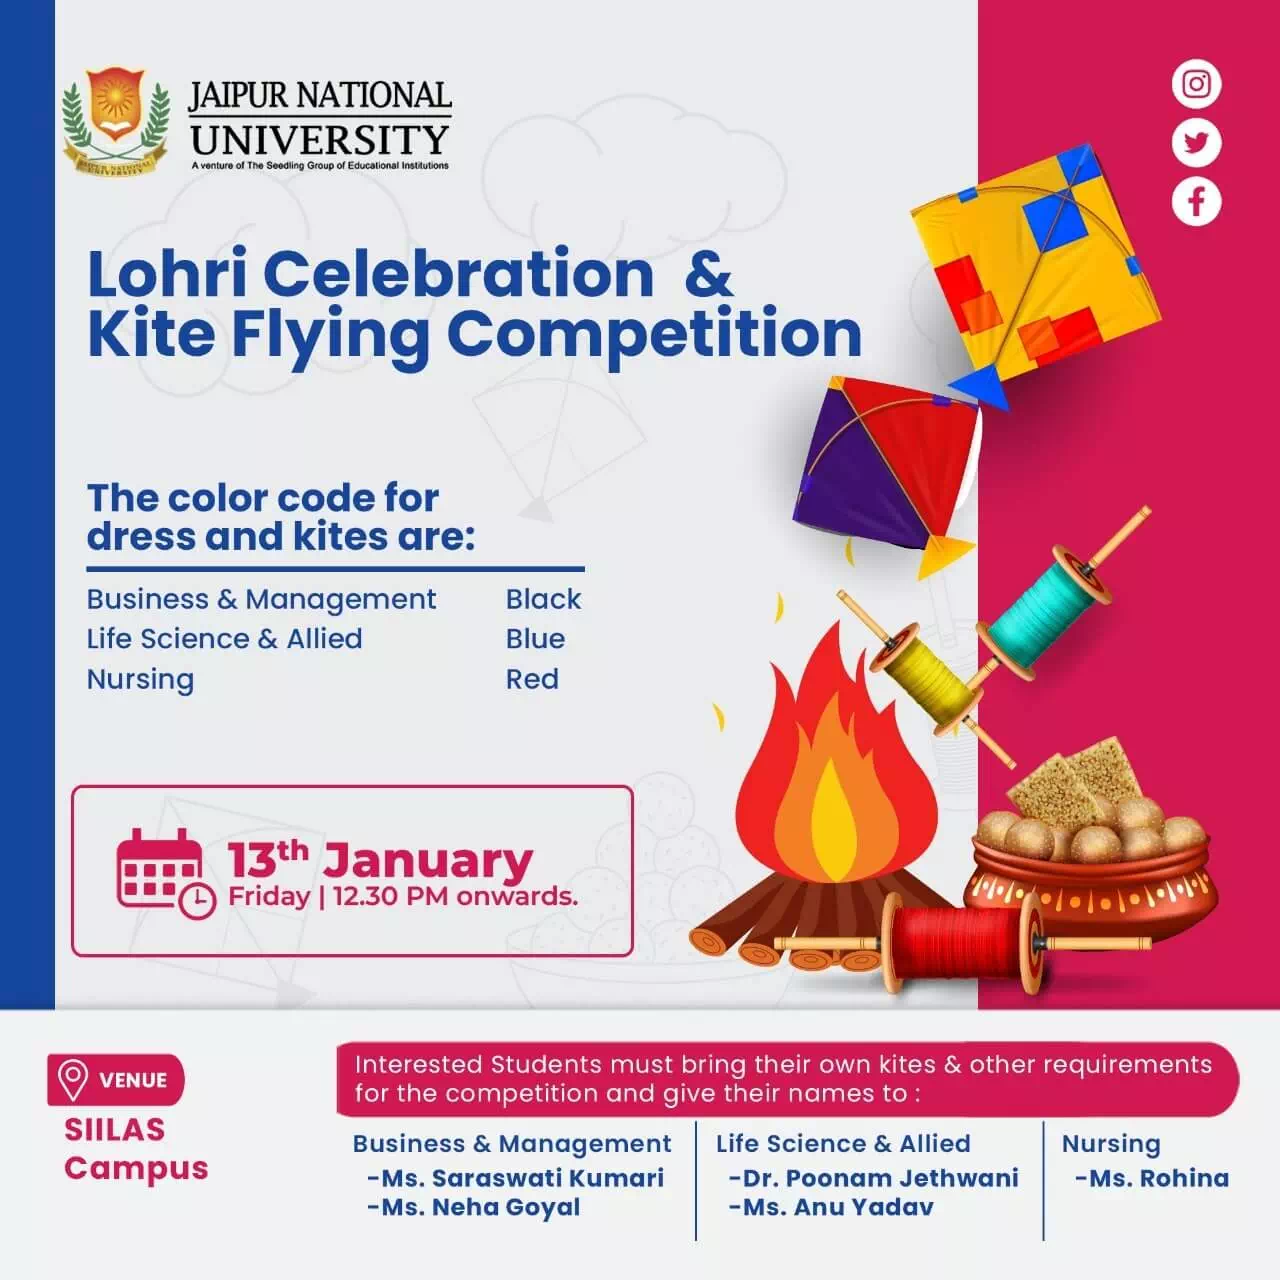 Kite Flying and Lohri Celebration